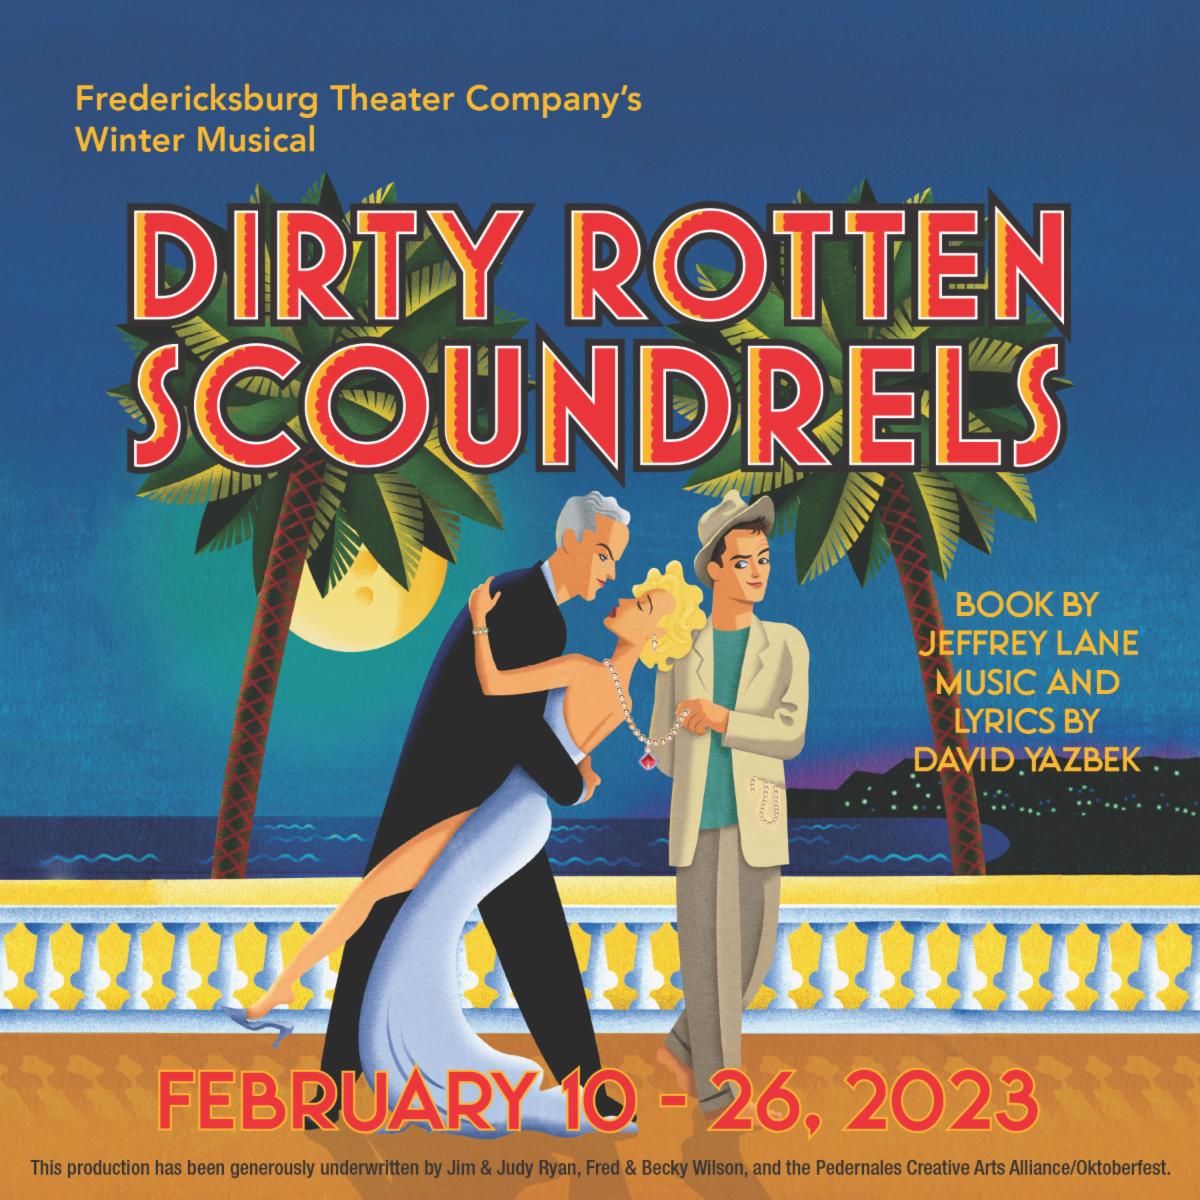 Dirty Rotten Scoundrels (Weekends)